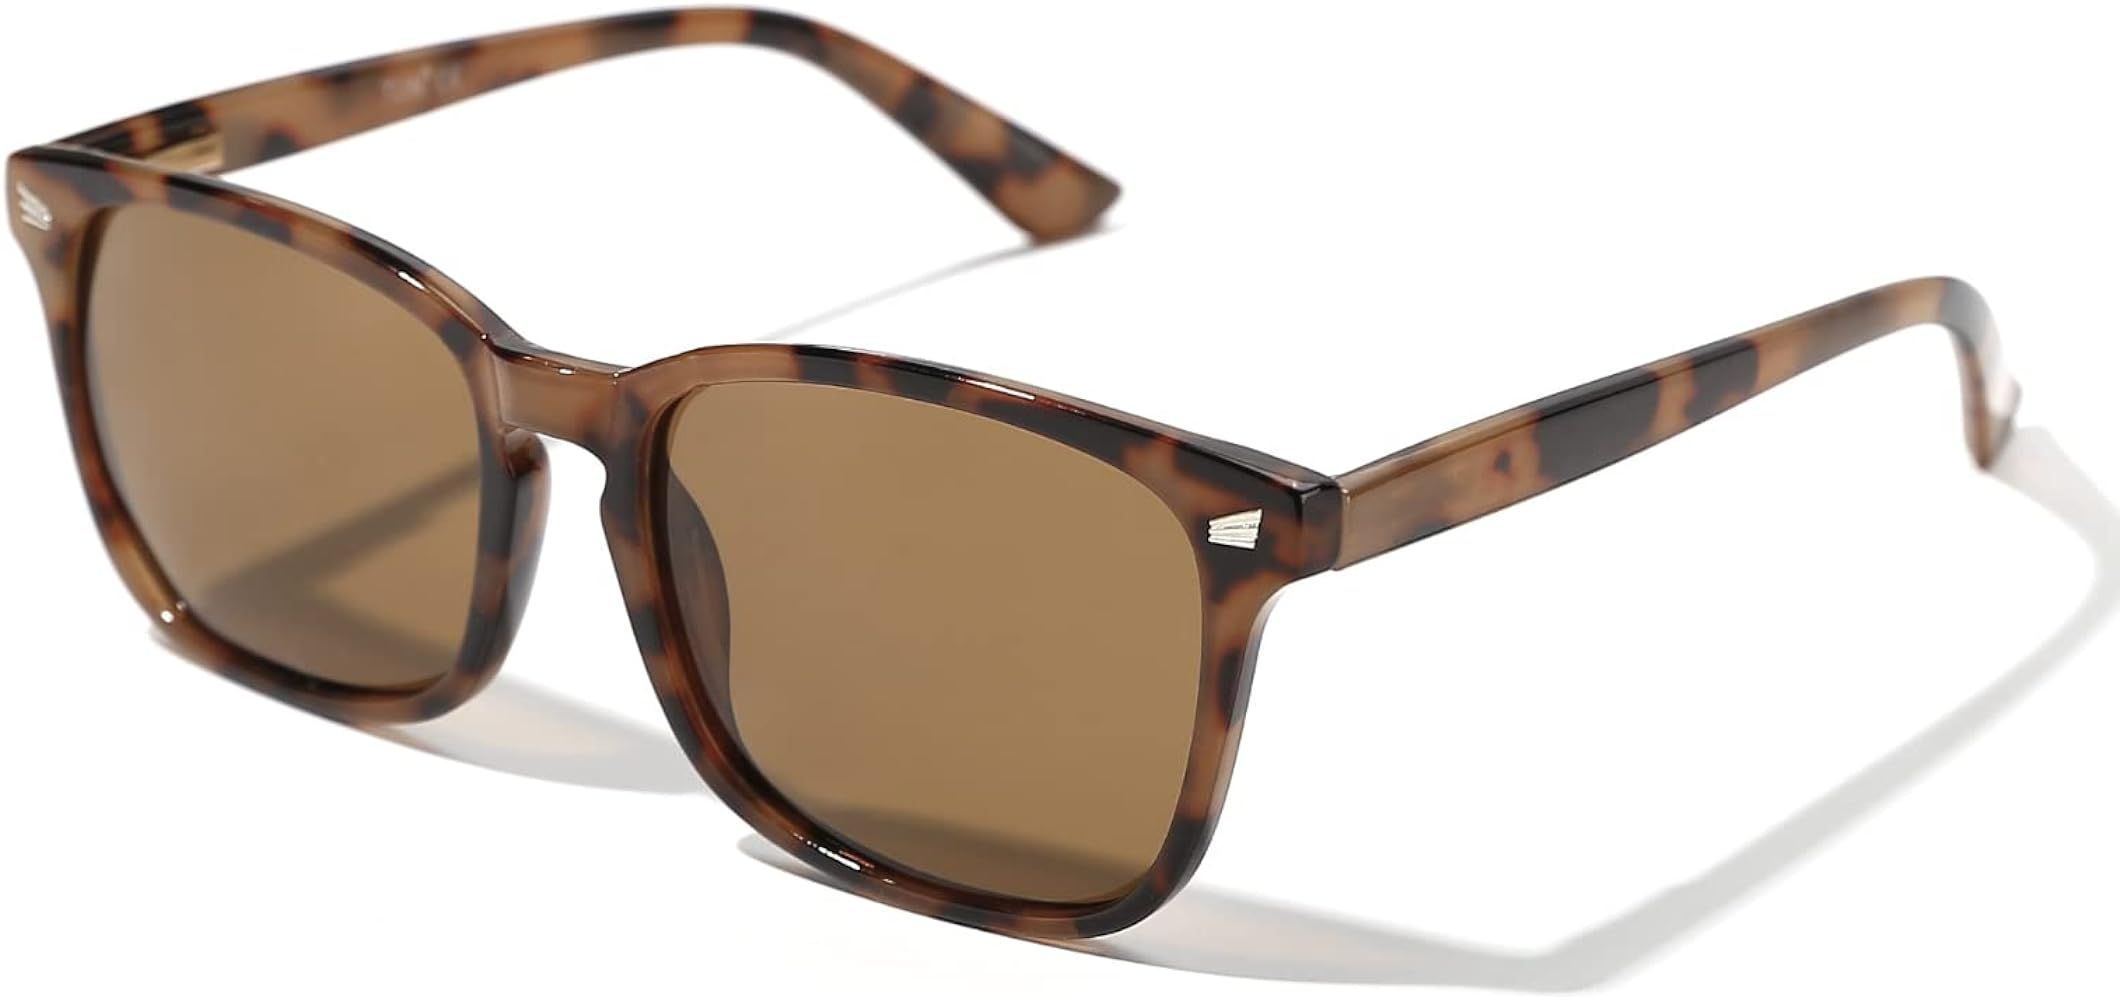 TIJN Polarized Sunglasses for Women Men Classic Trendy Stylish Sun Glasses 100% UV Protection | Amazon (US)